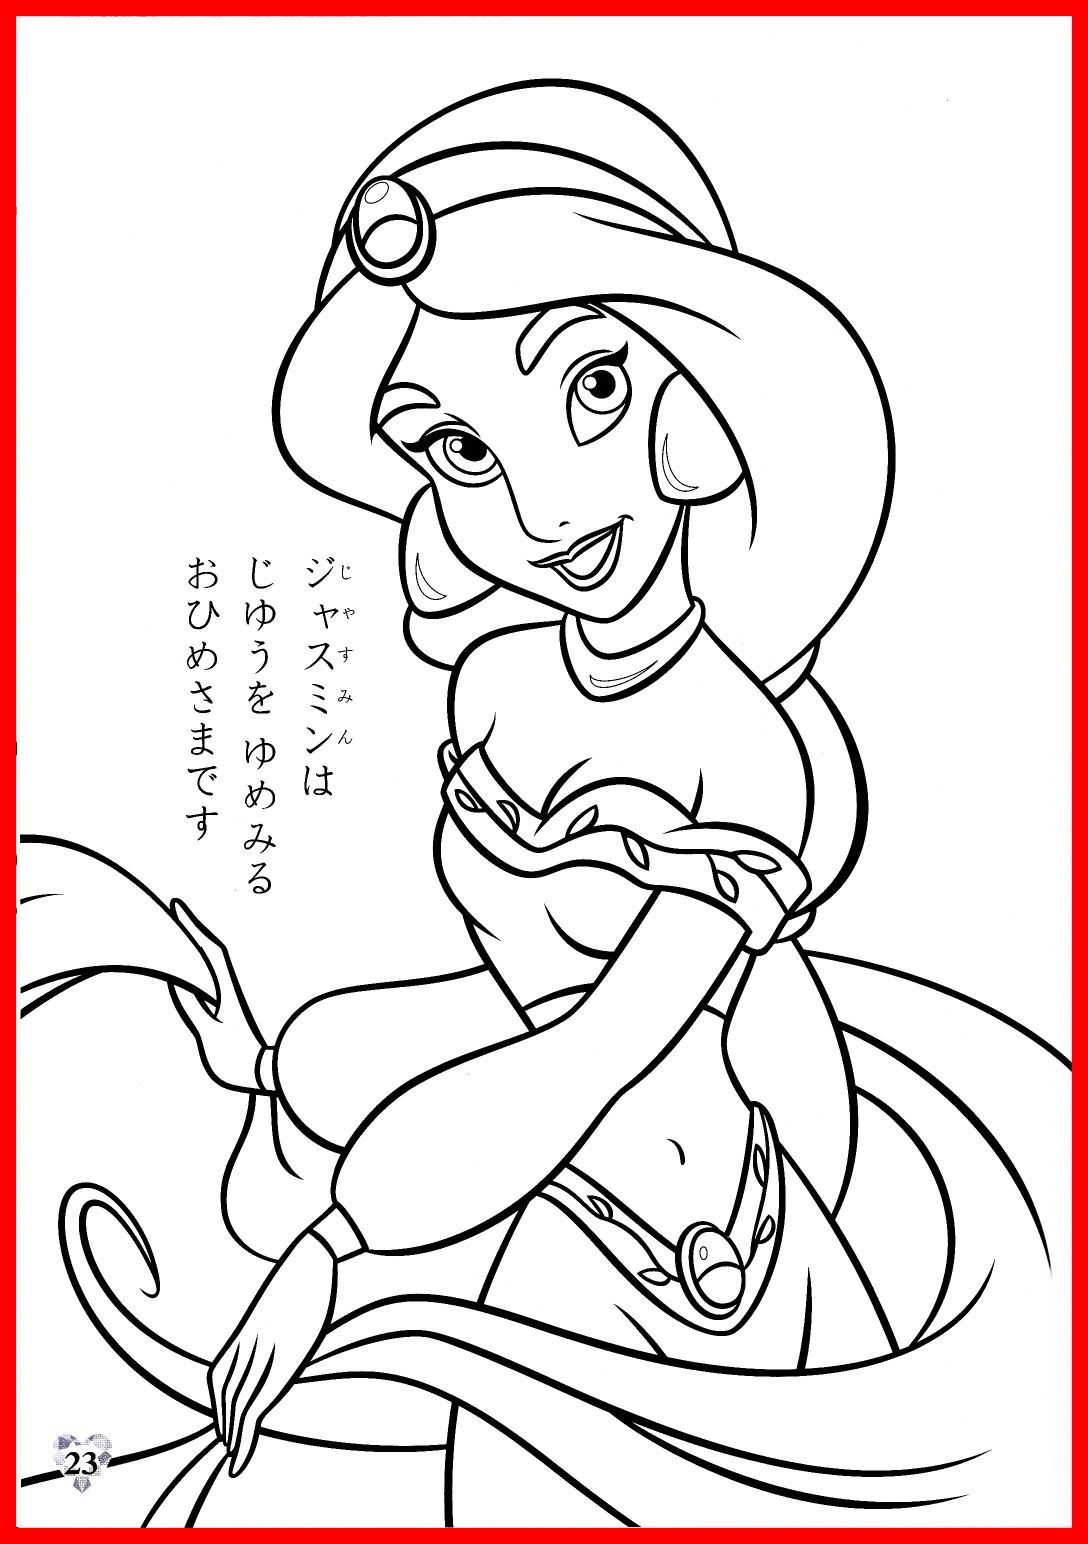 Disney Princess Jasmine Coloring Pages at GetColorings.com | Free ...